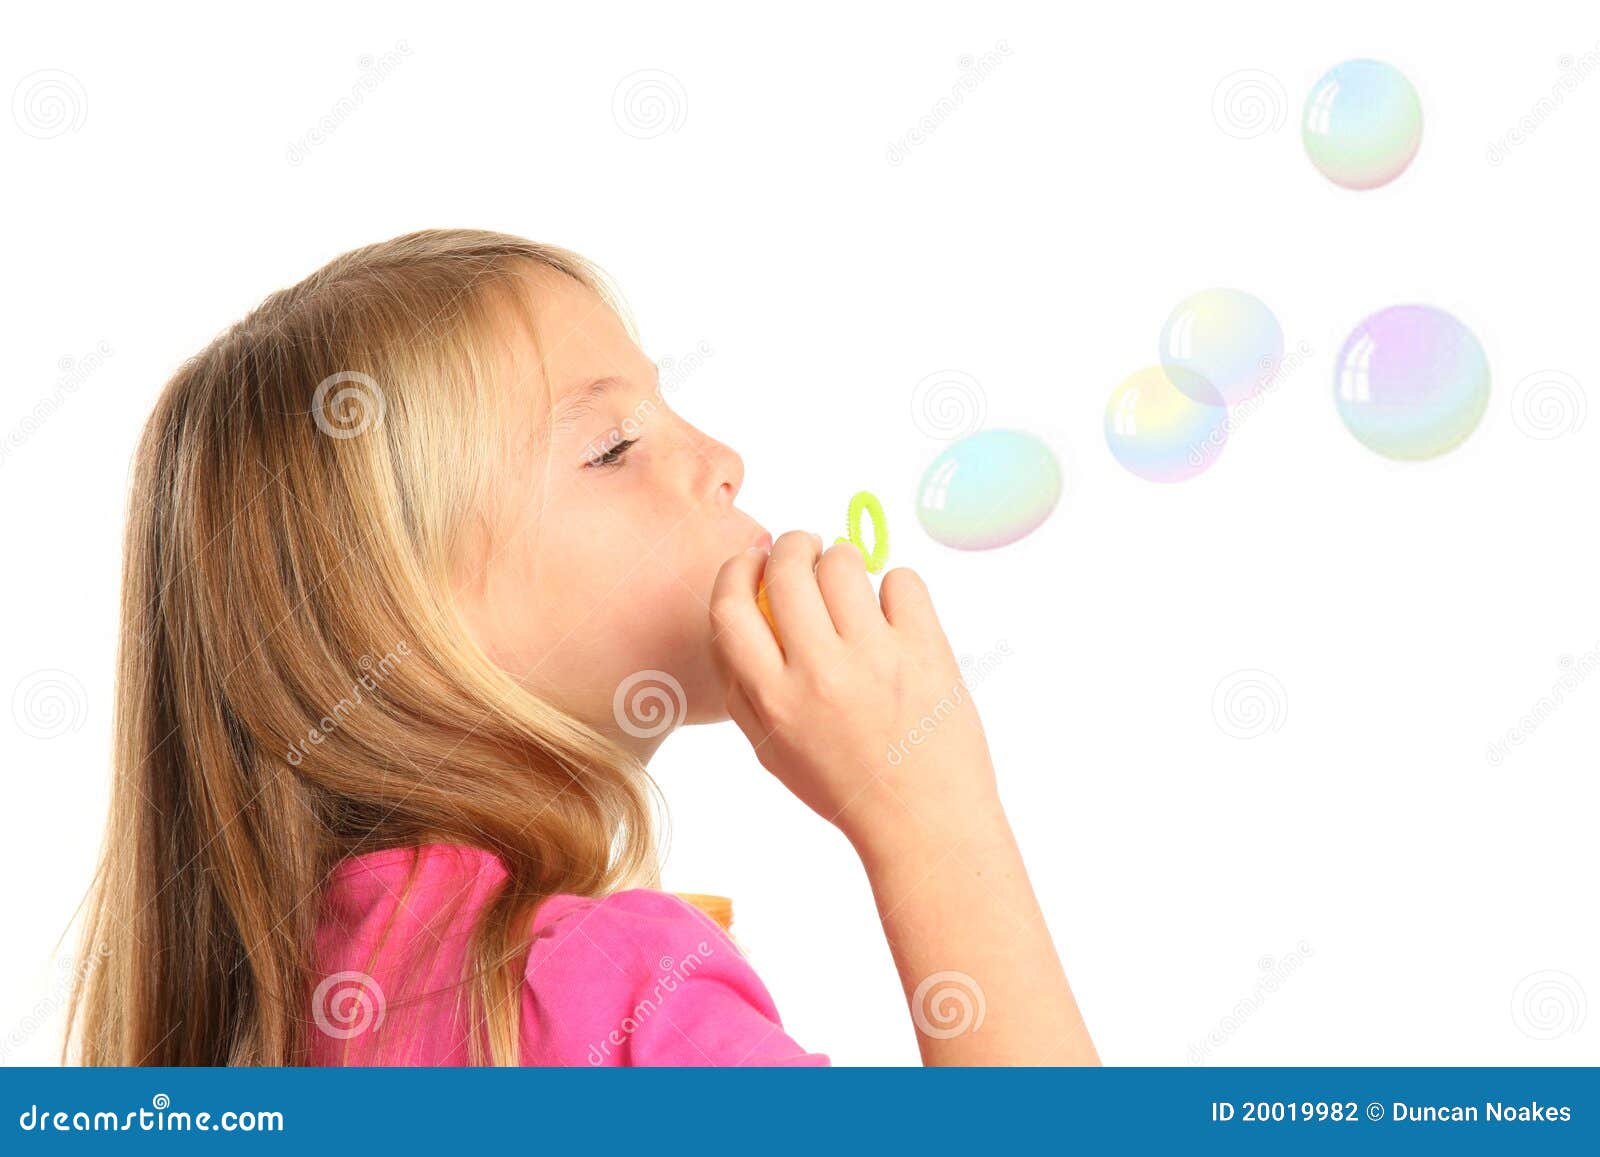 pretty kid blowing bubbles